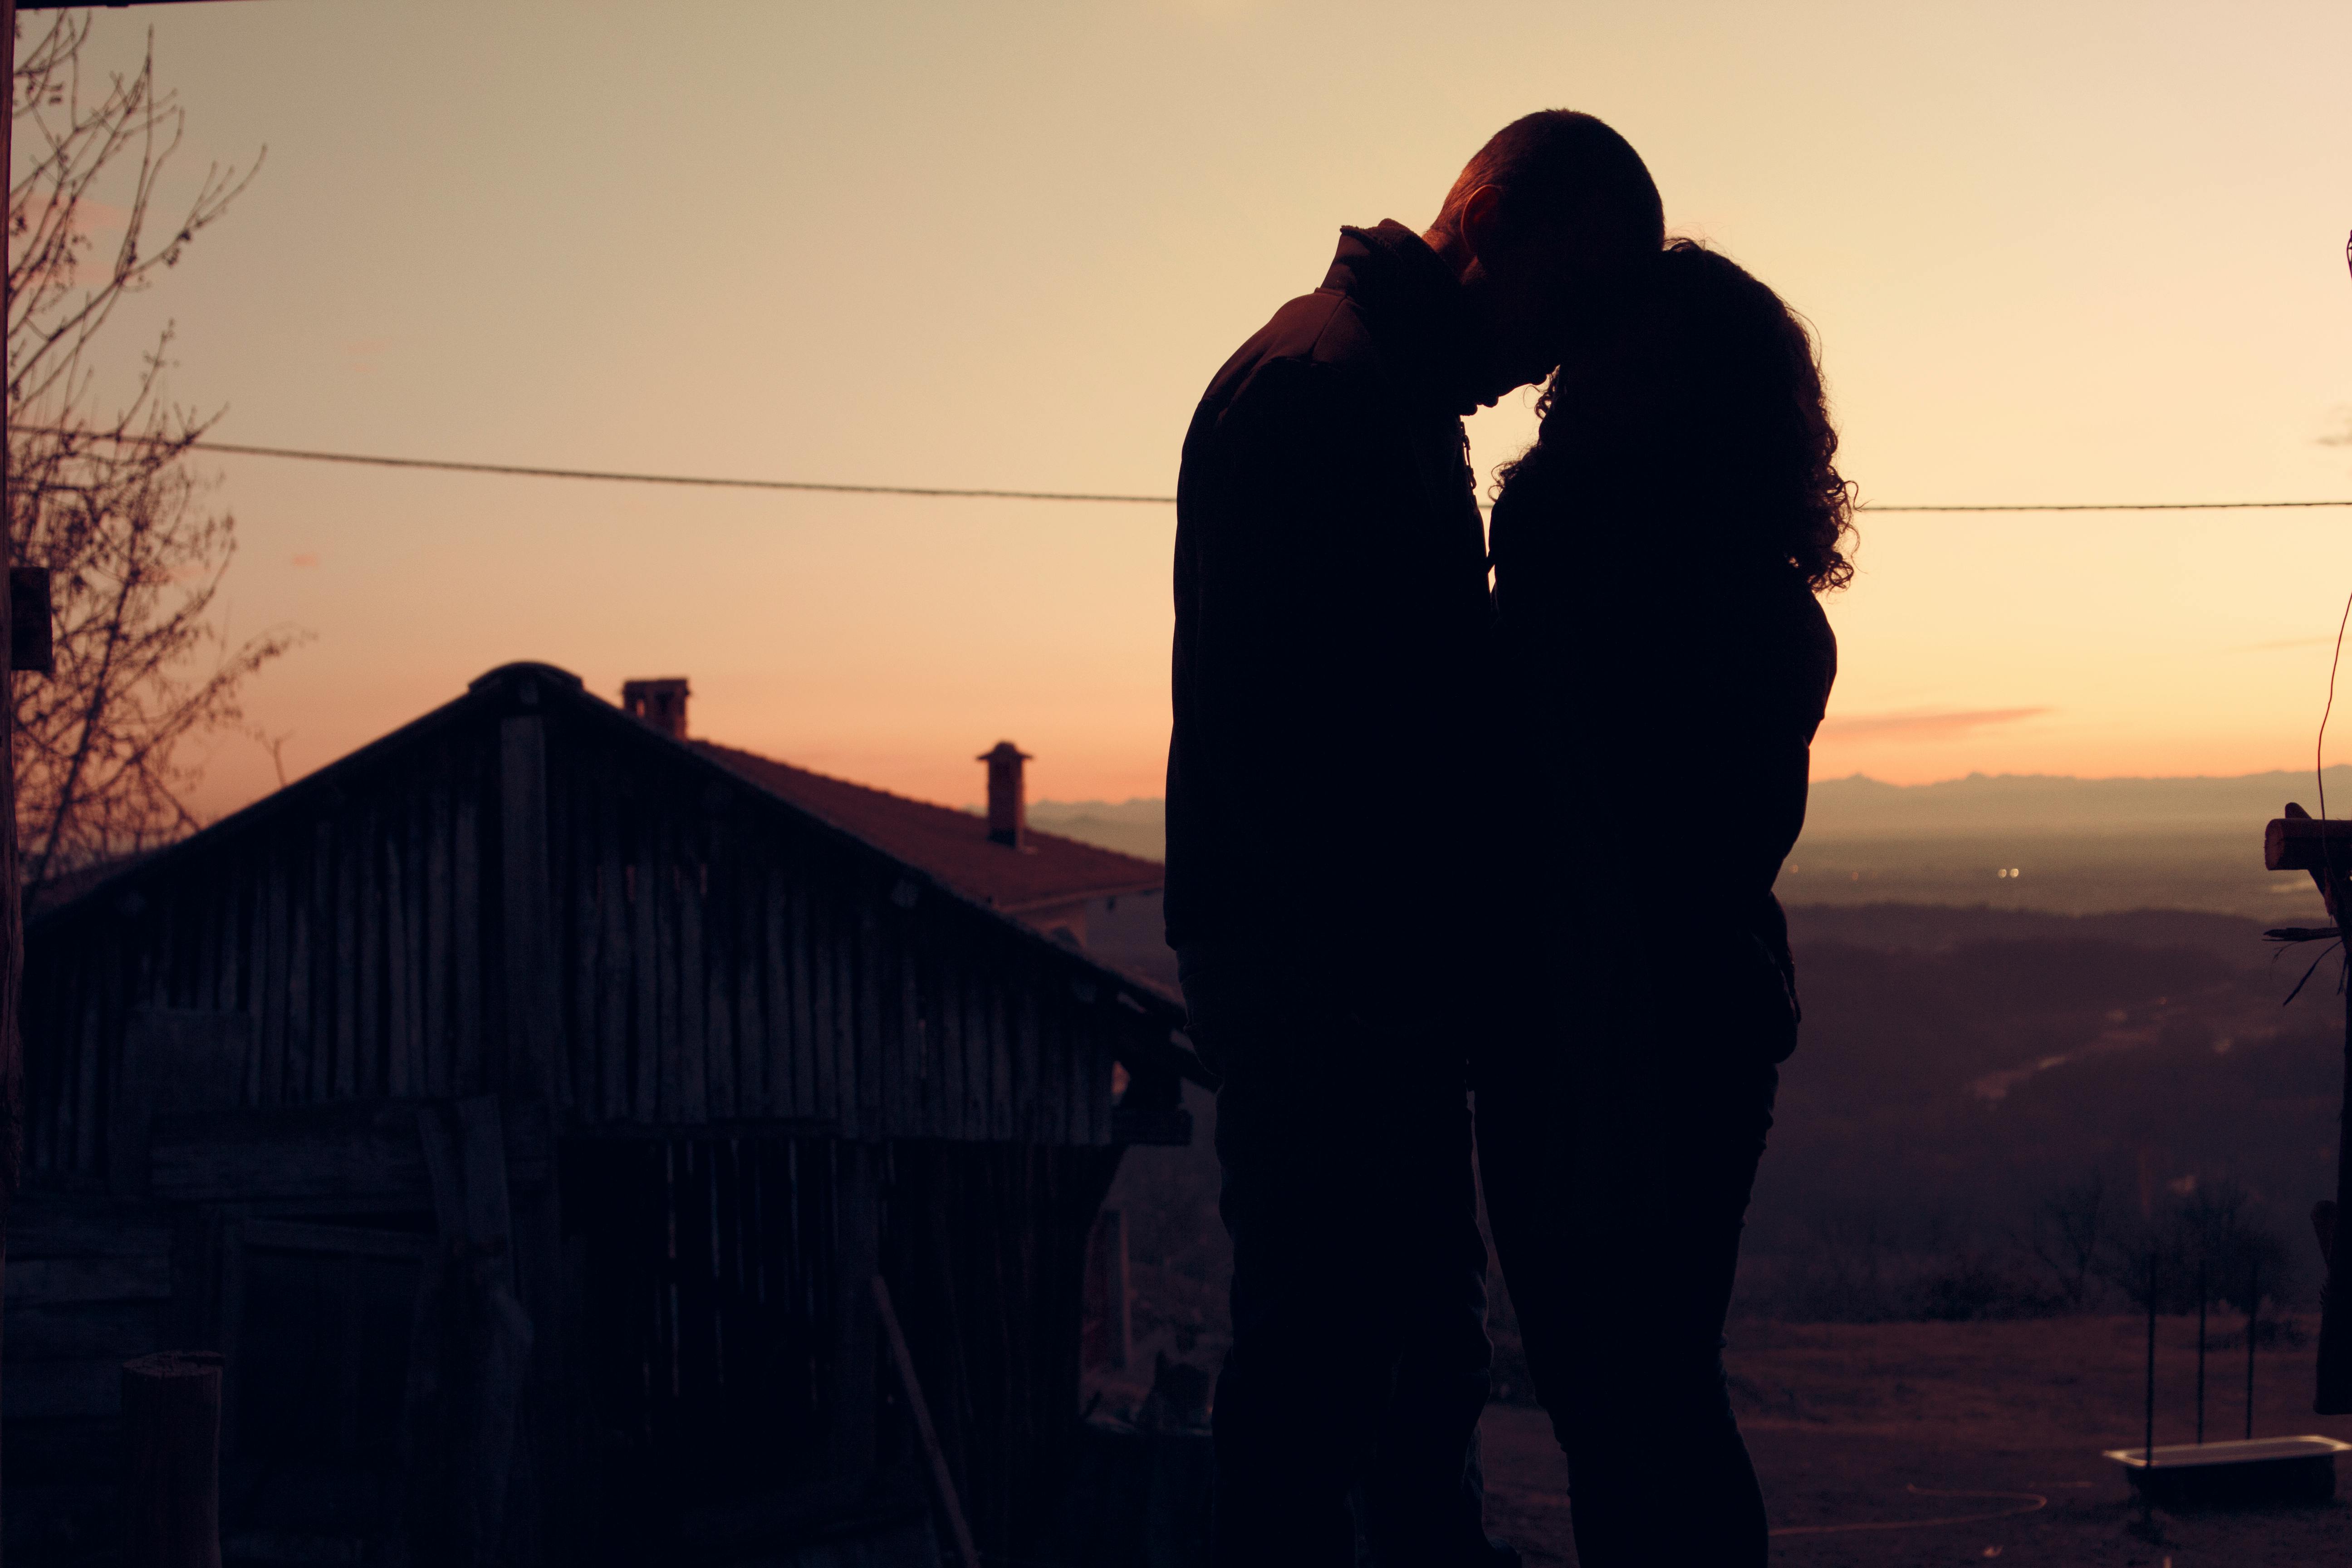 https://images.pexels.com/photos/1121/dawn-sunset-couple-love.jpg